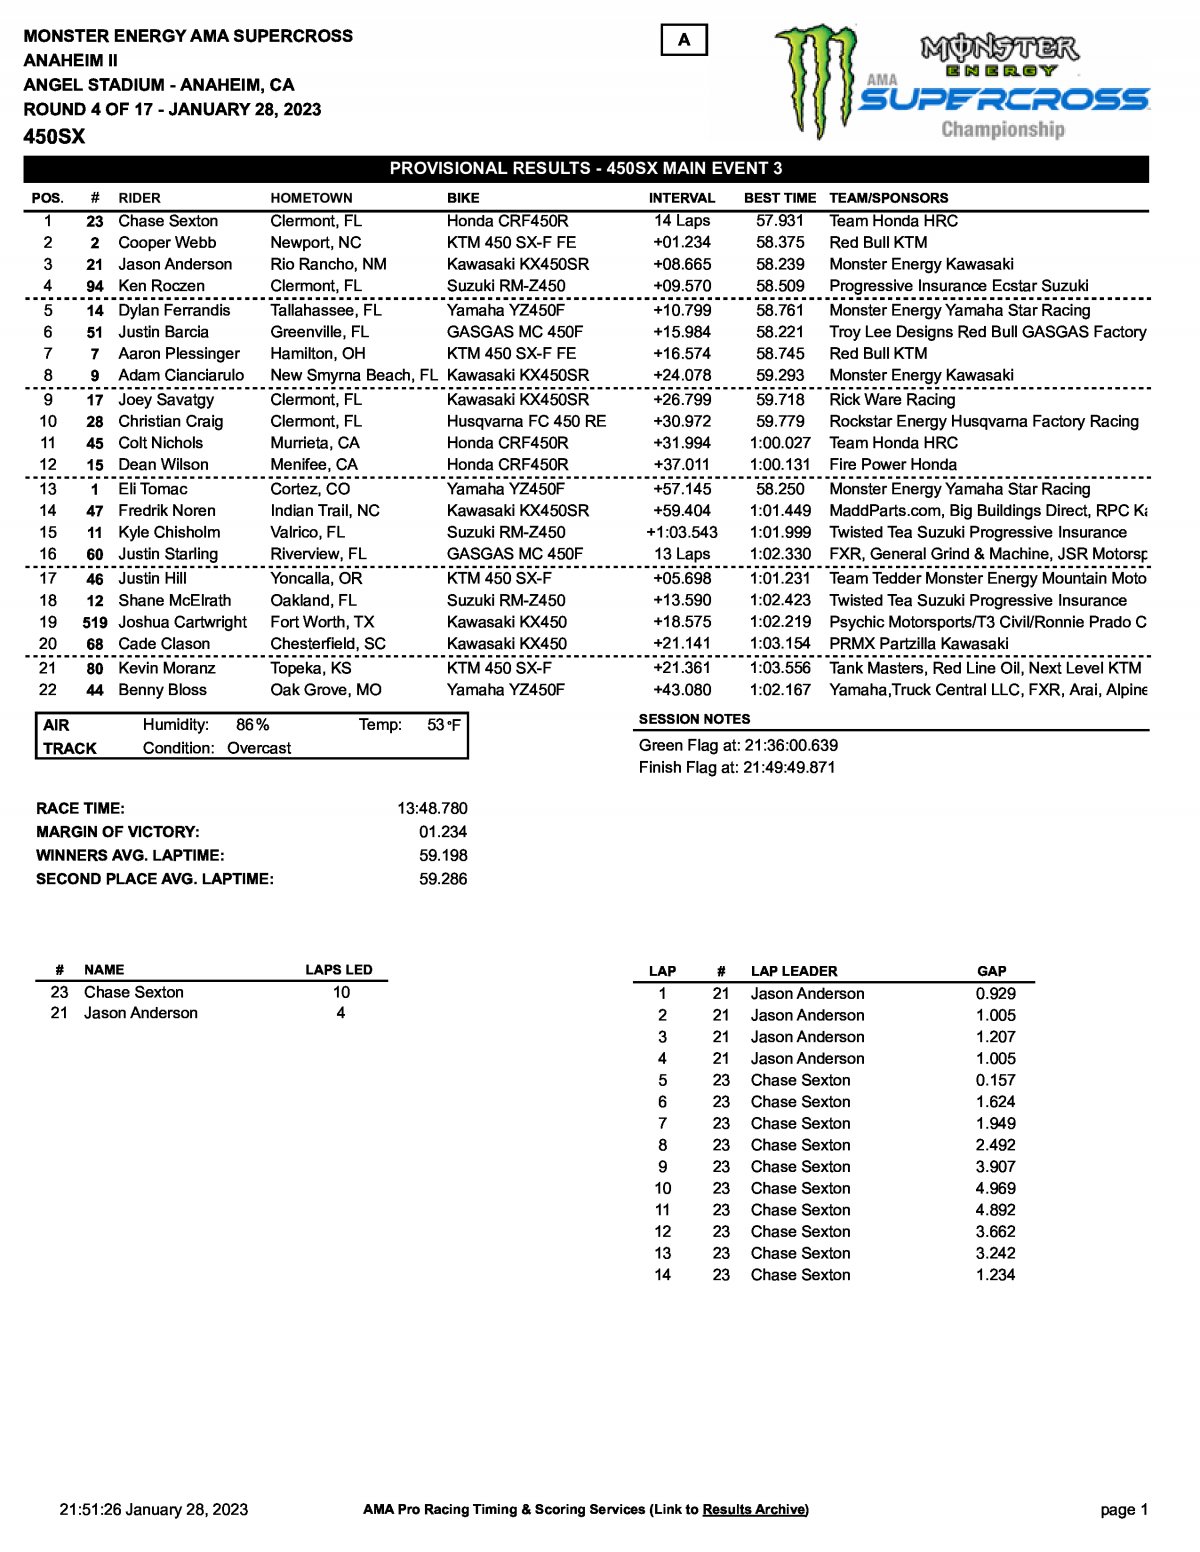 AMA Supercross - Результаты 3 заезда Triple Crown 450SX Anaheim-2 (2023)